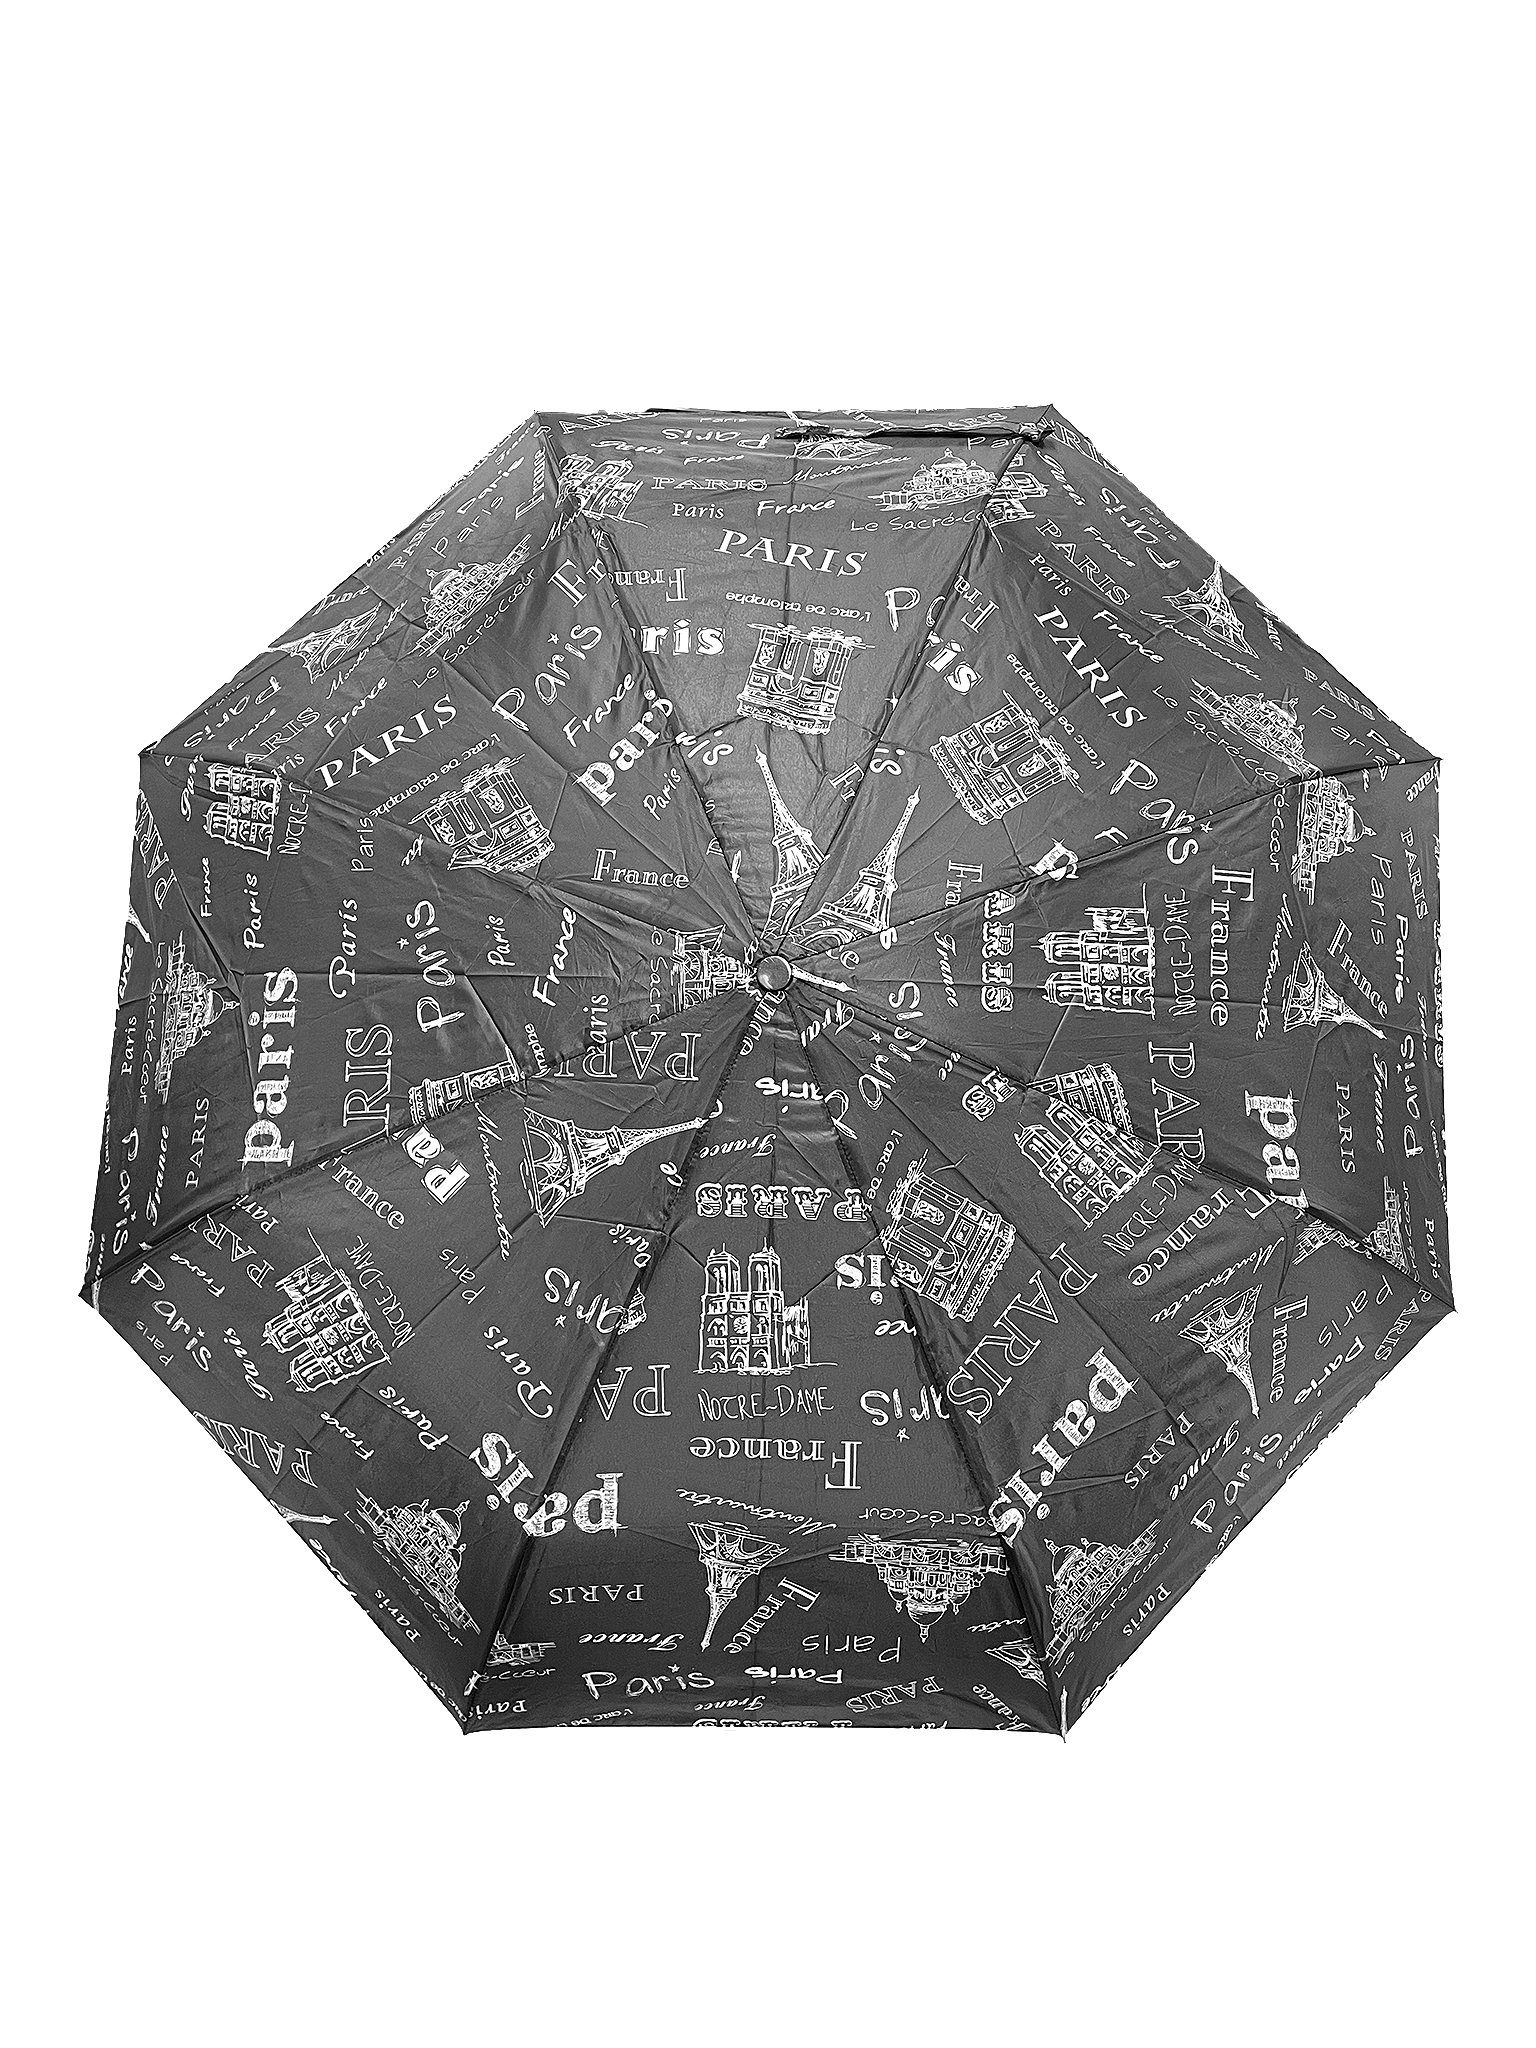 Paris Taschenschirm, ANELY Kleiner in Schwarz Gemustert 6746 Regenschirm Taschenregenschirm